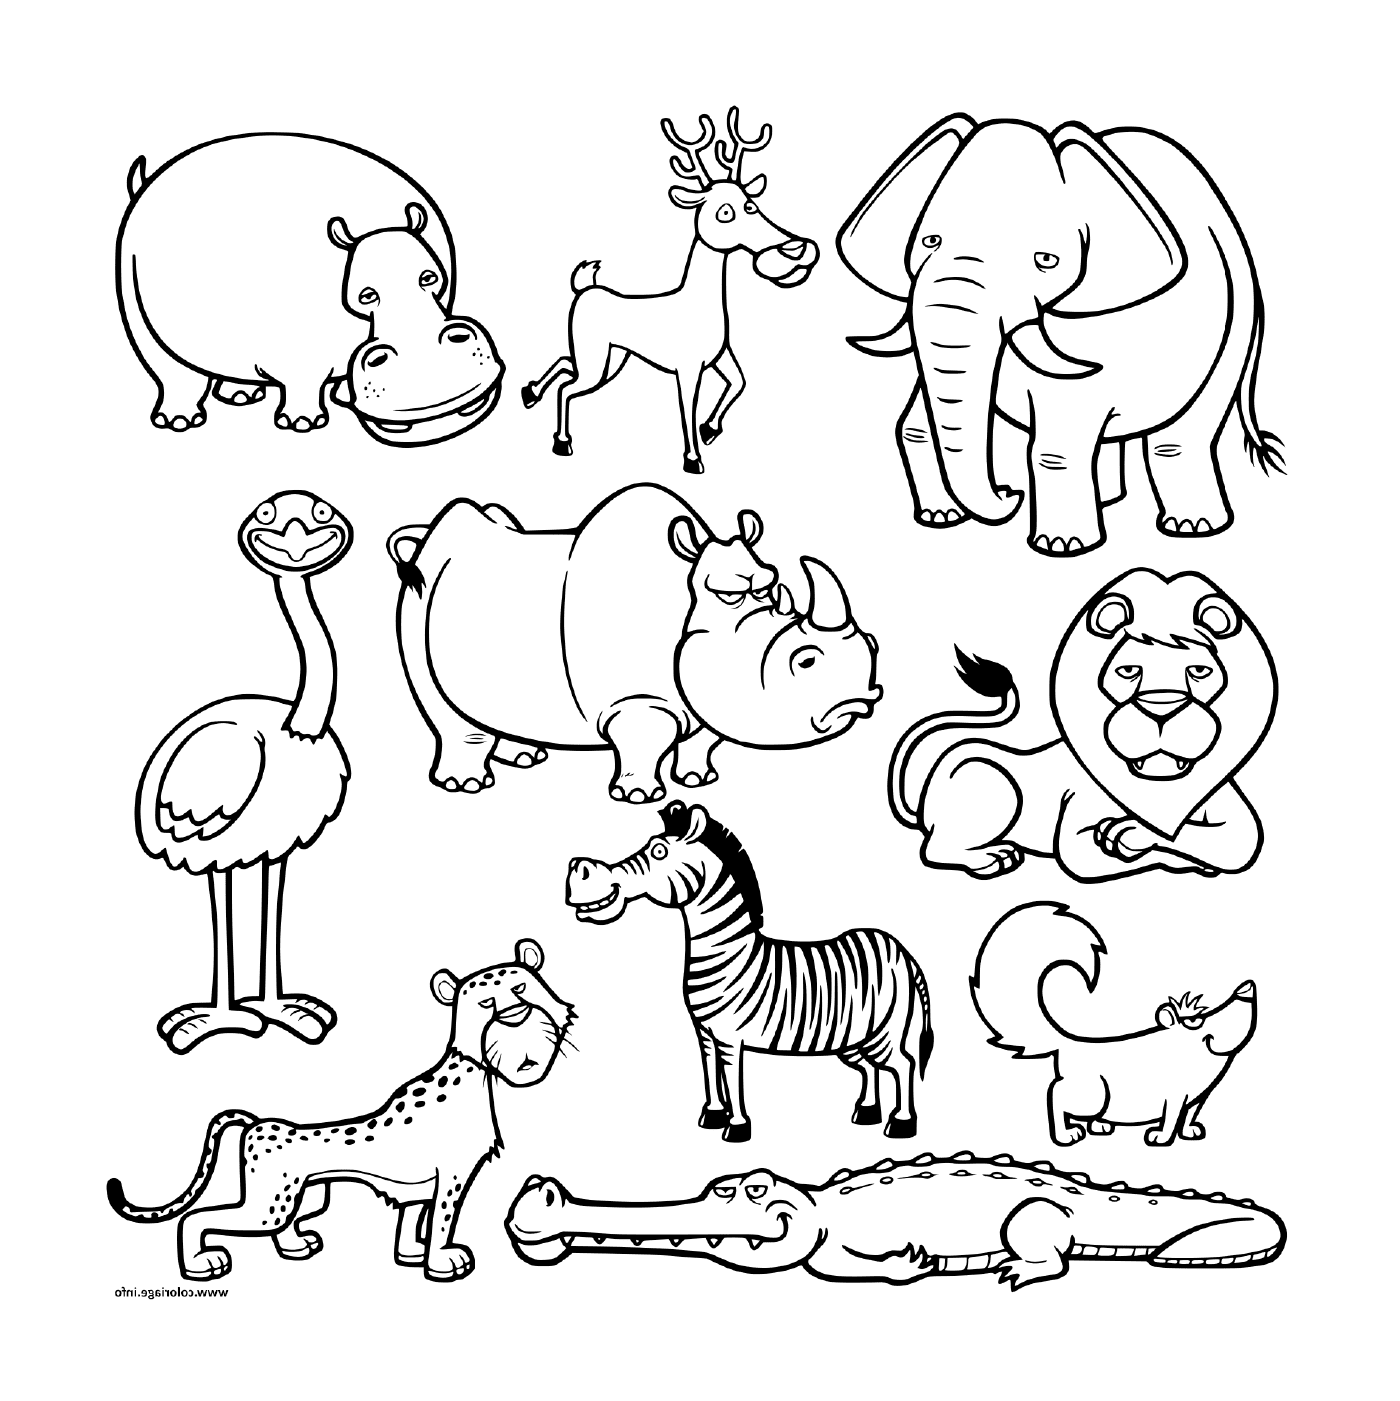  Un grupo de animales en grupos 